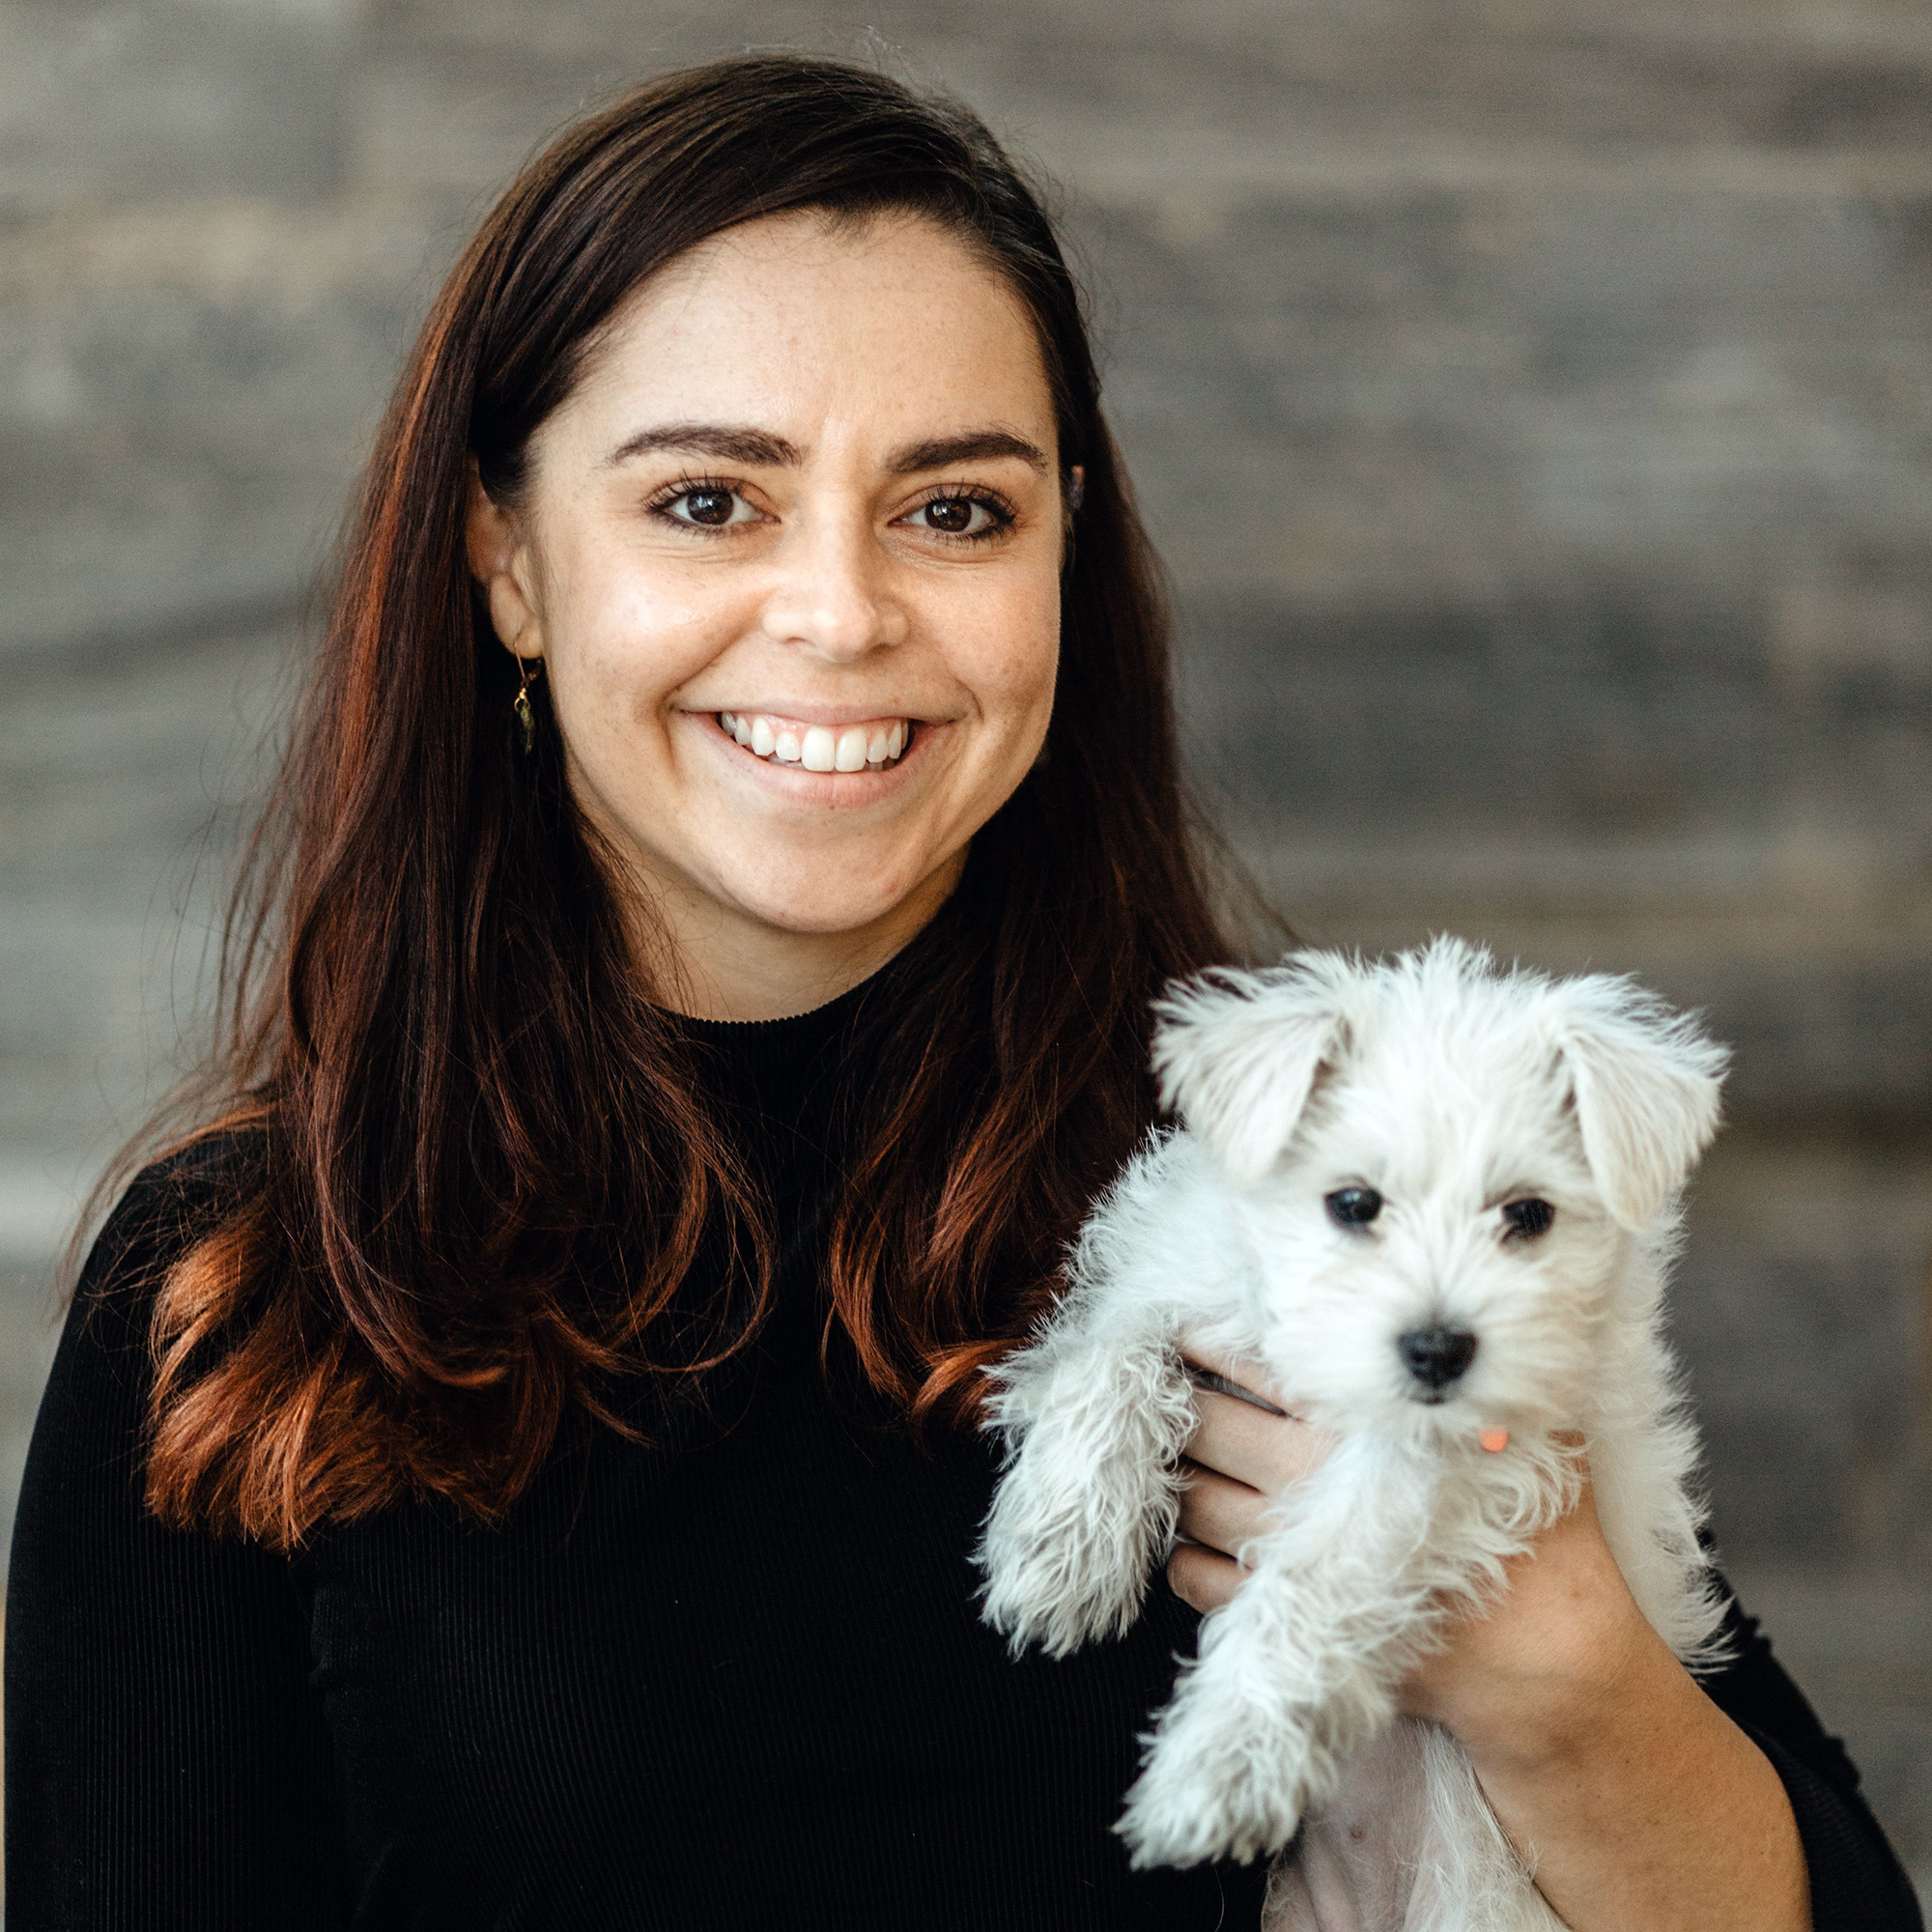 Elisa Sepulveda with a white dog